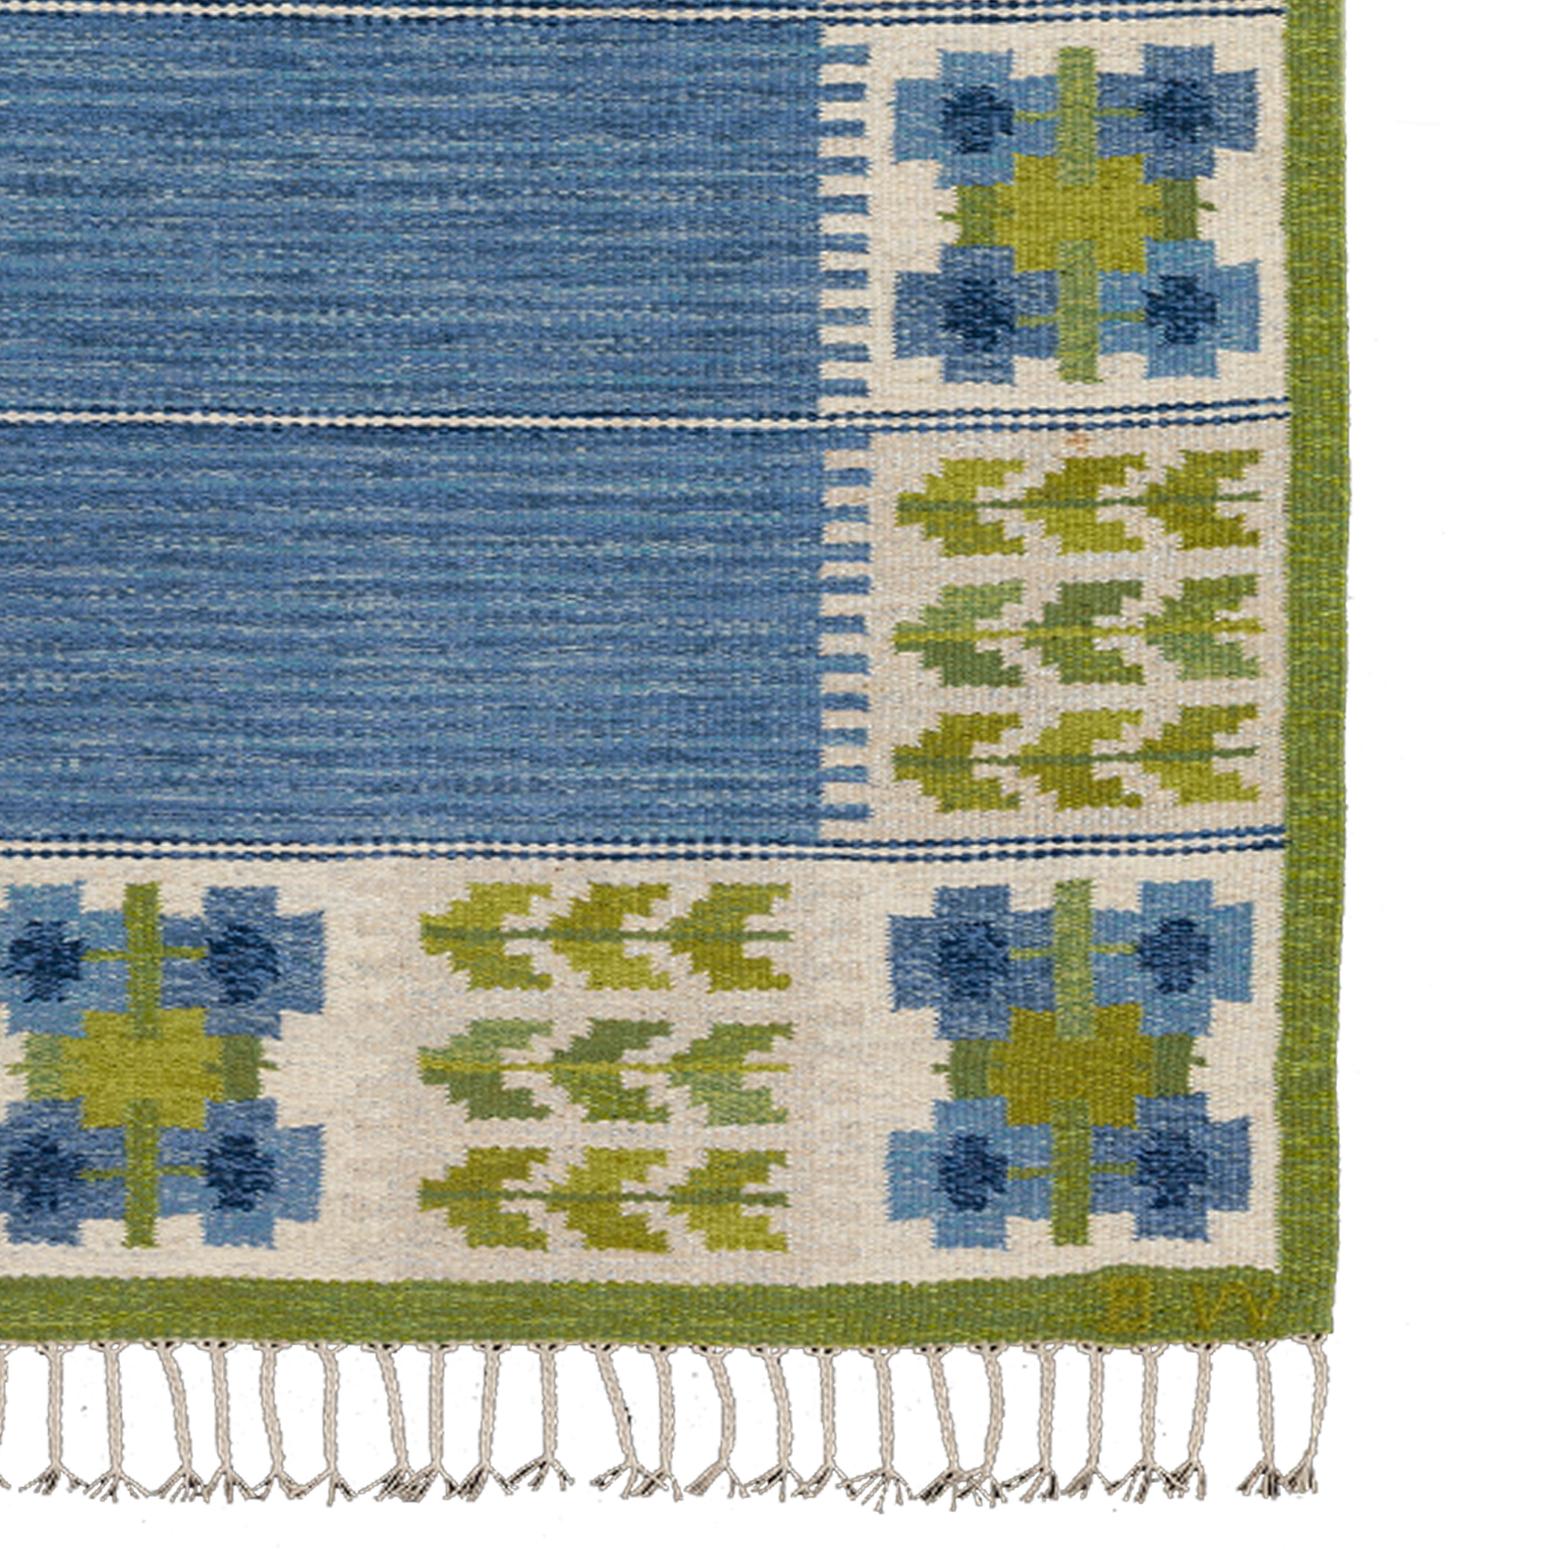 Mid-20th Century Scandinavian Modern Flat-Weave in Blue and Green by Berit Woelfer 'Koenig'